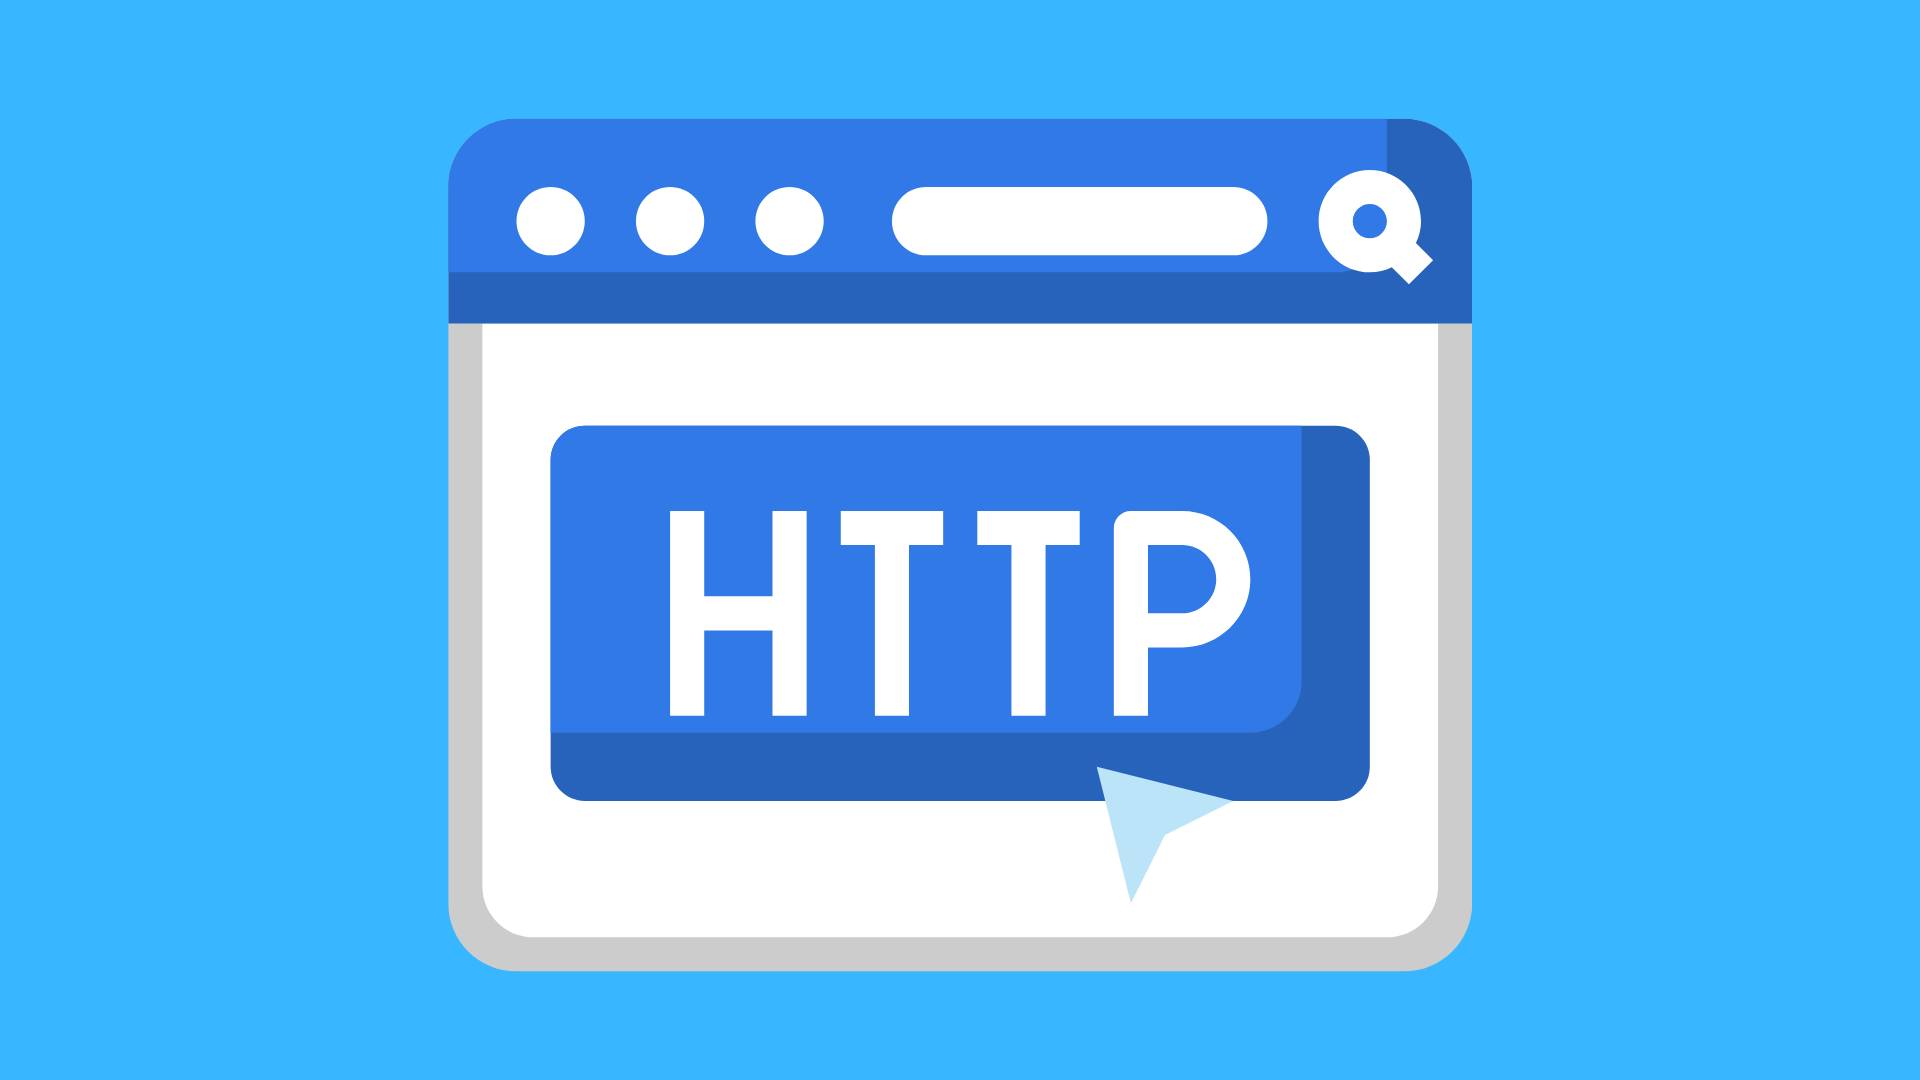 HTTP methods